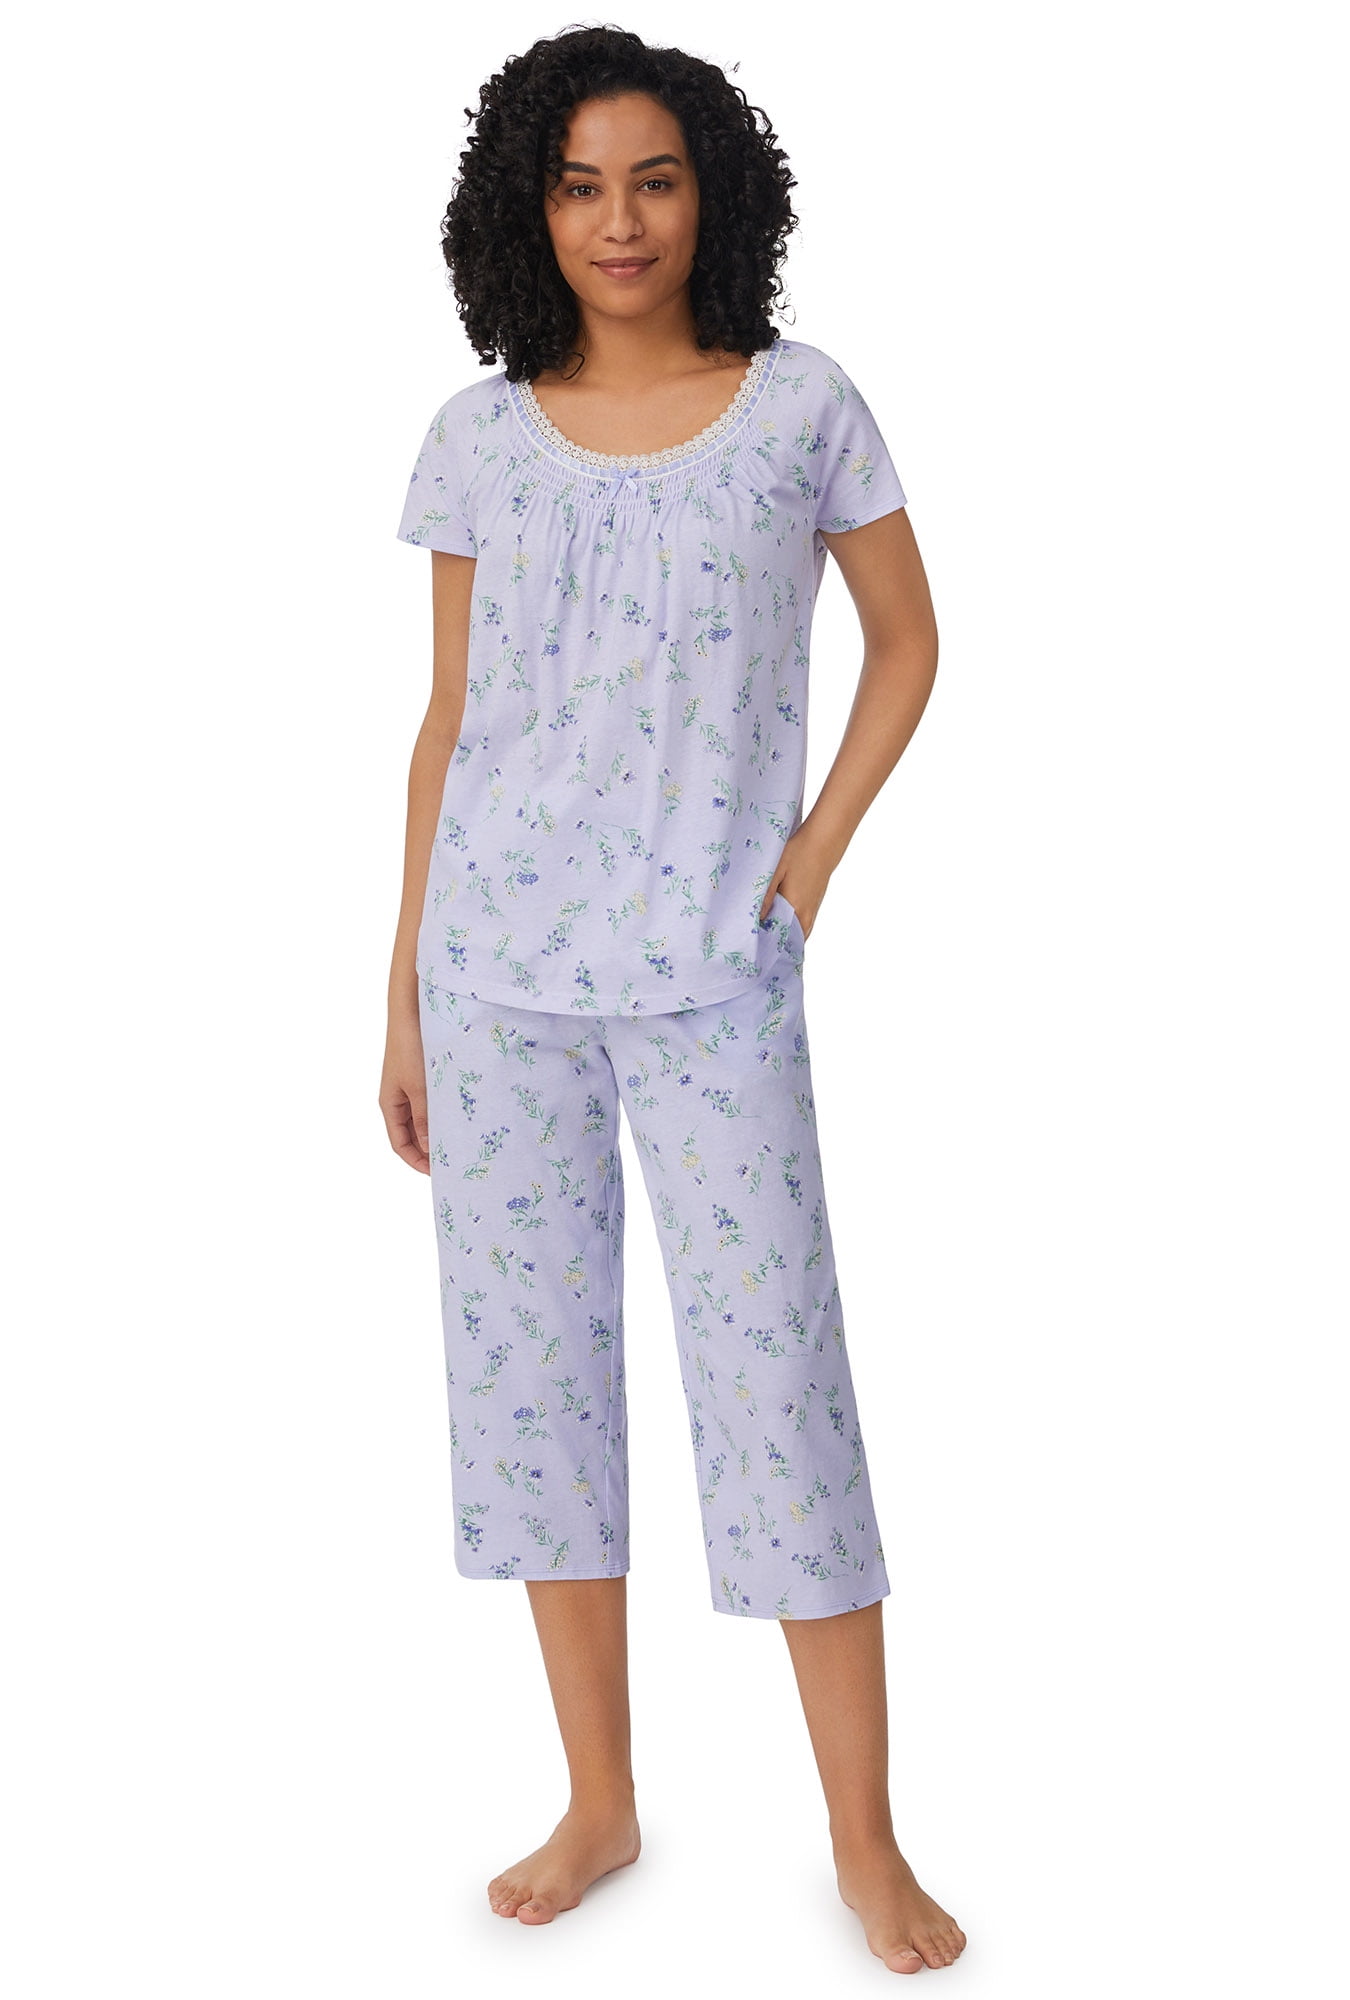 Aria Women's Cap Sleeve Capri Pajama Set - Walmart.com